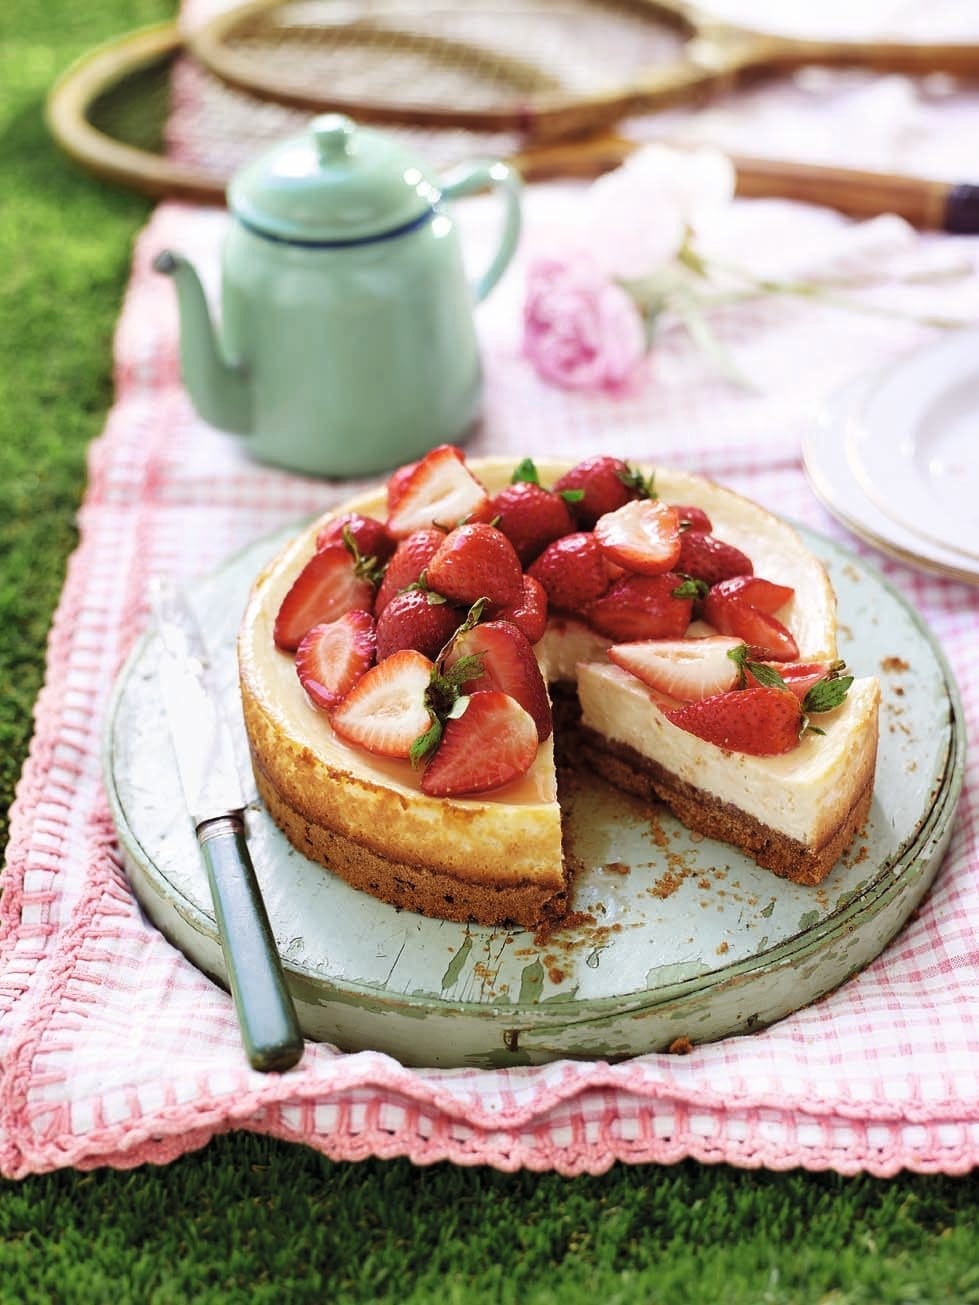 Strawberry and vanilla baked cheesecake recipe | delicious ...